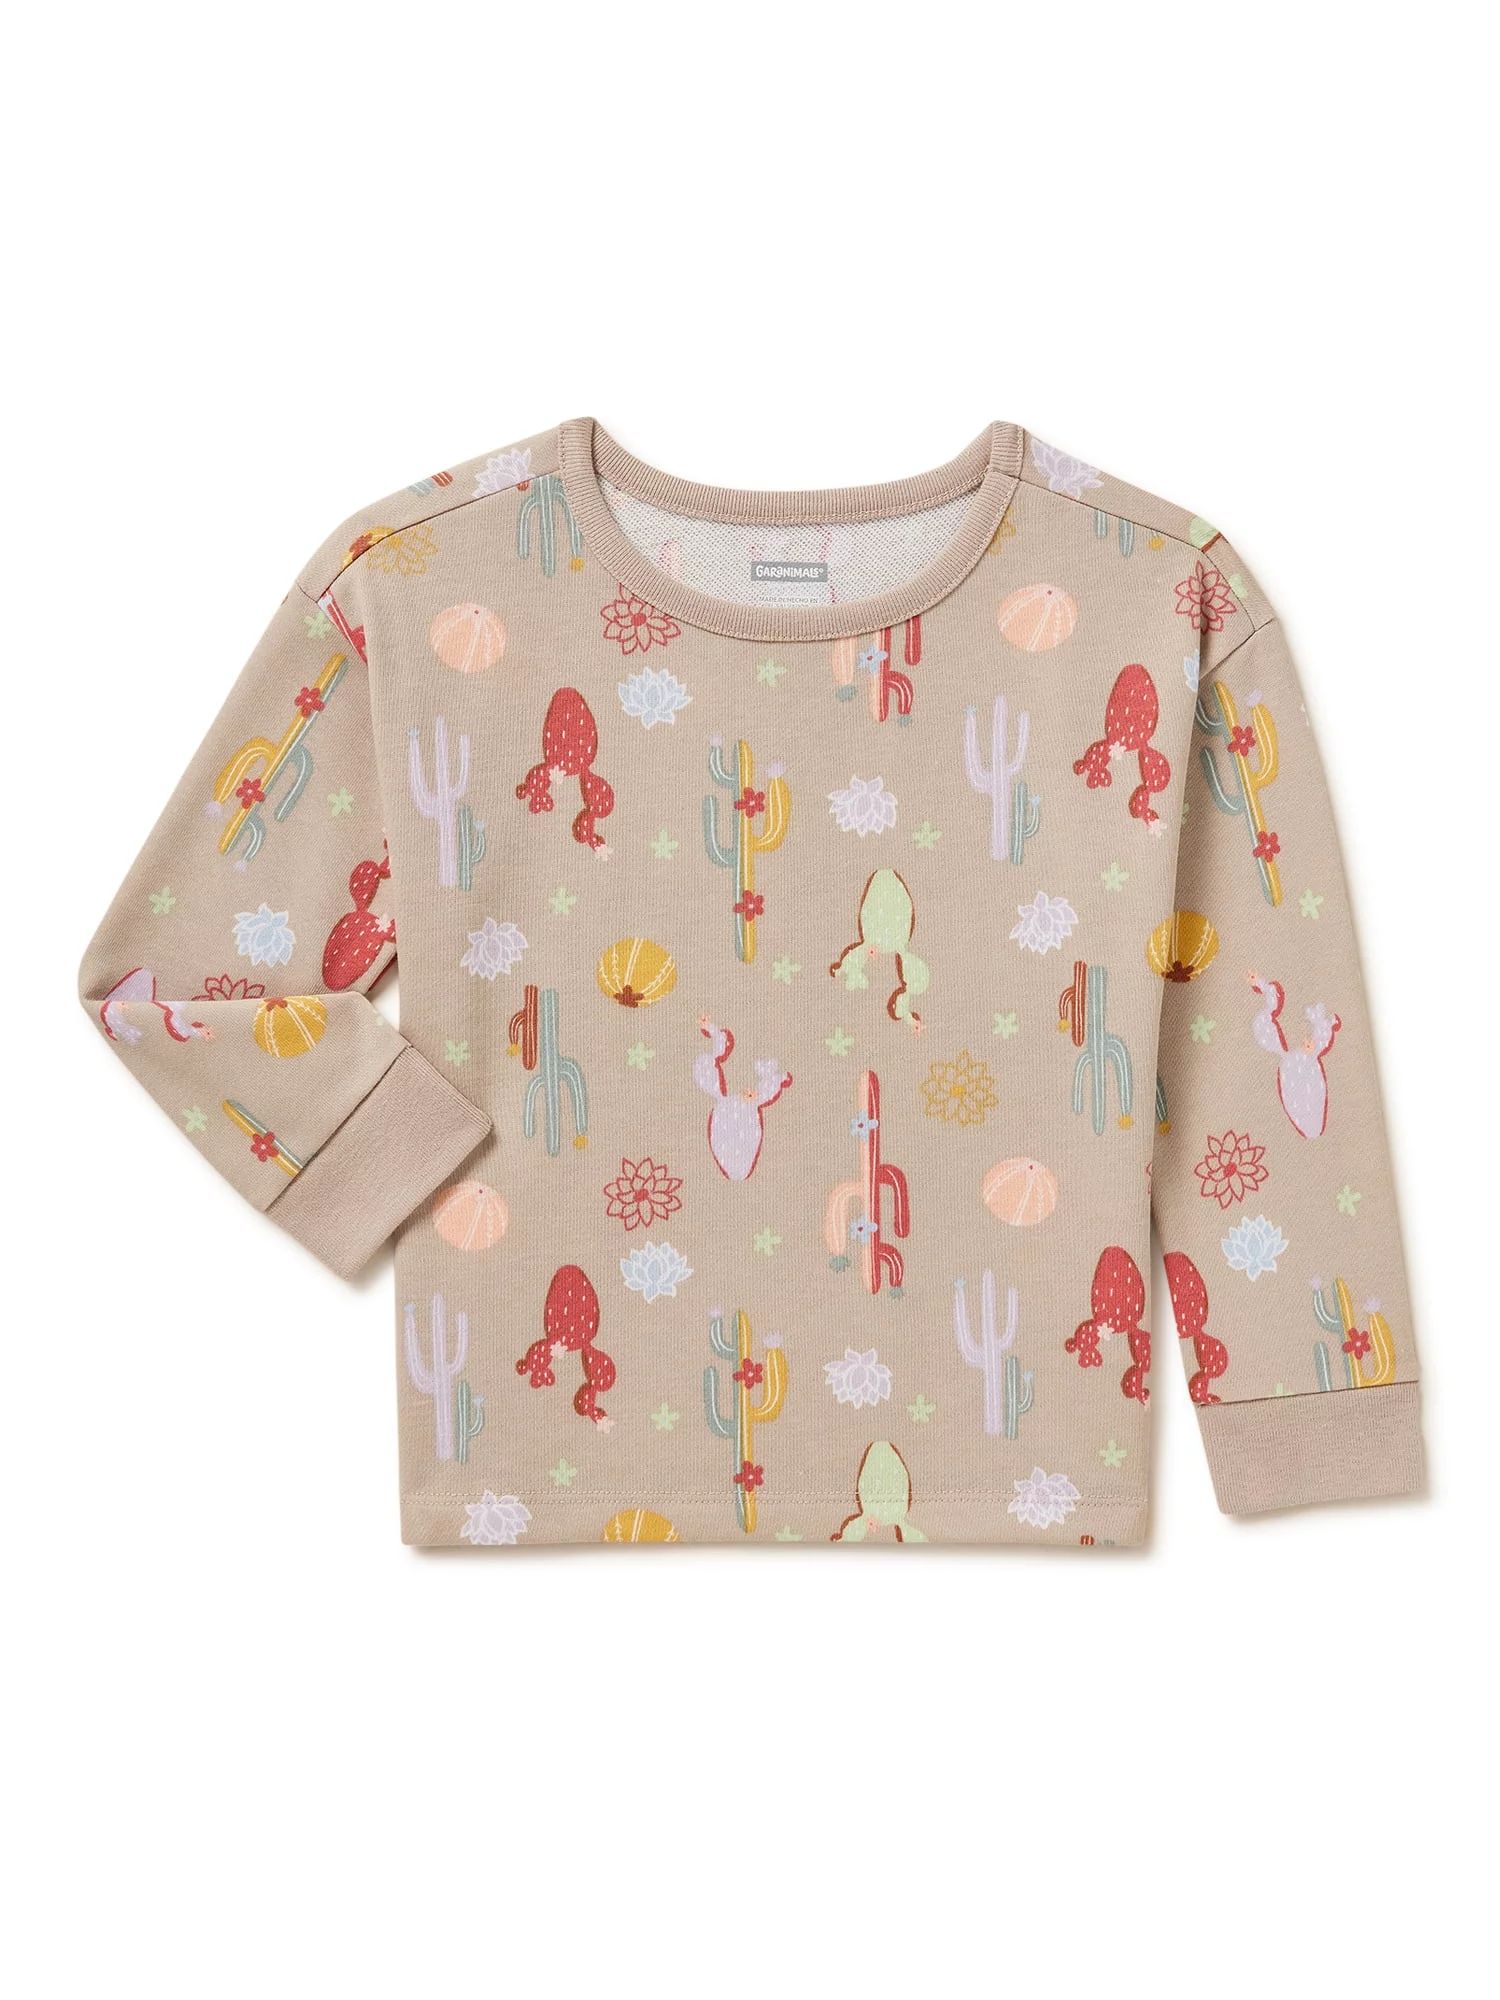 Garanimals Baby and Toddler Girls Long Sleeve Print Sweatshirt, Sizes 12M-5T | Walmart (US)